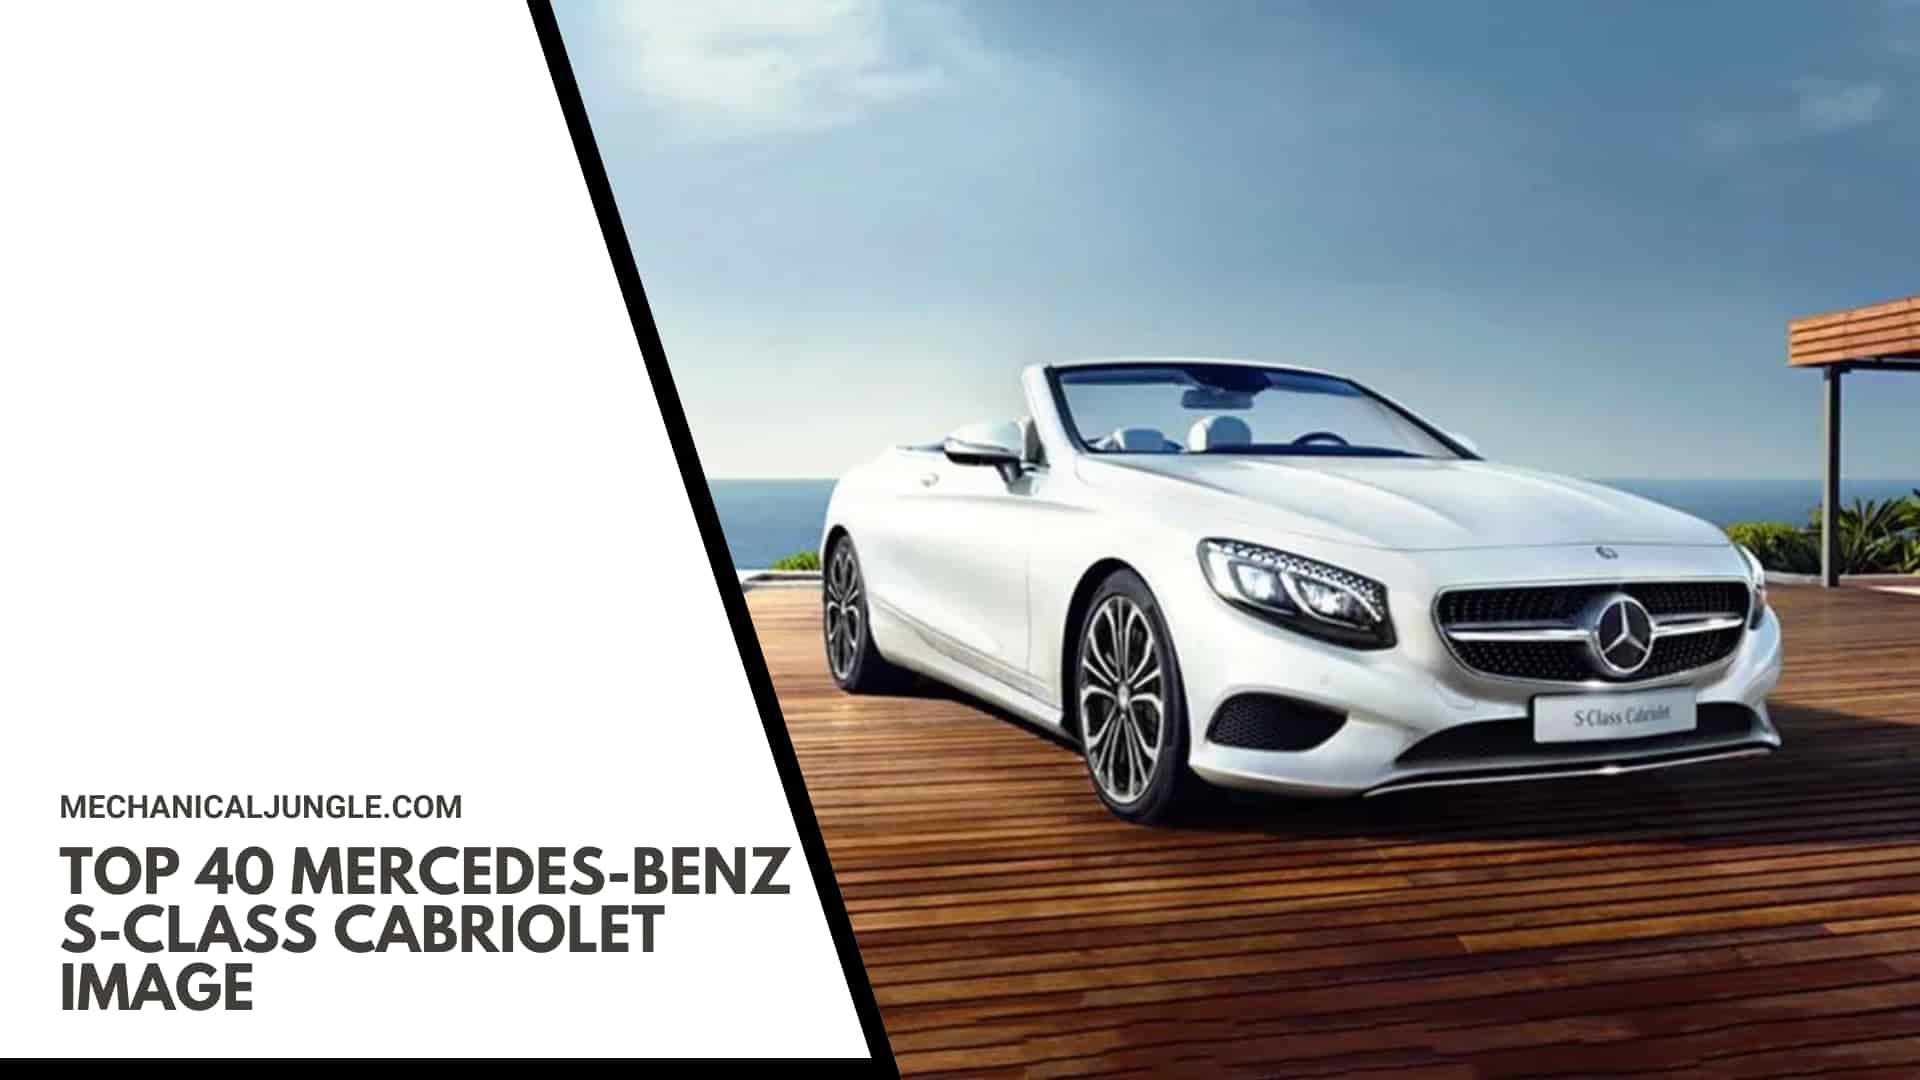 Top 40 Mercedes-Benz S-Class Cabriolet Image